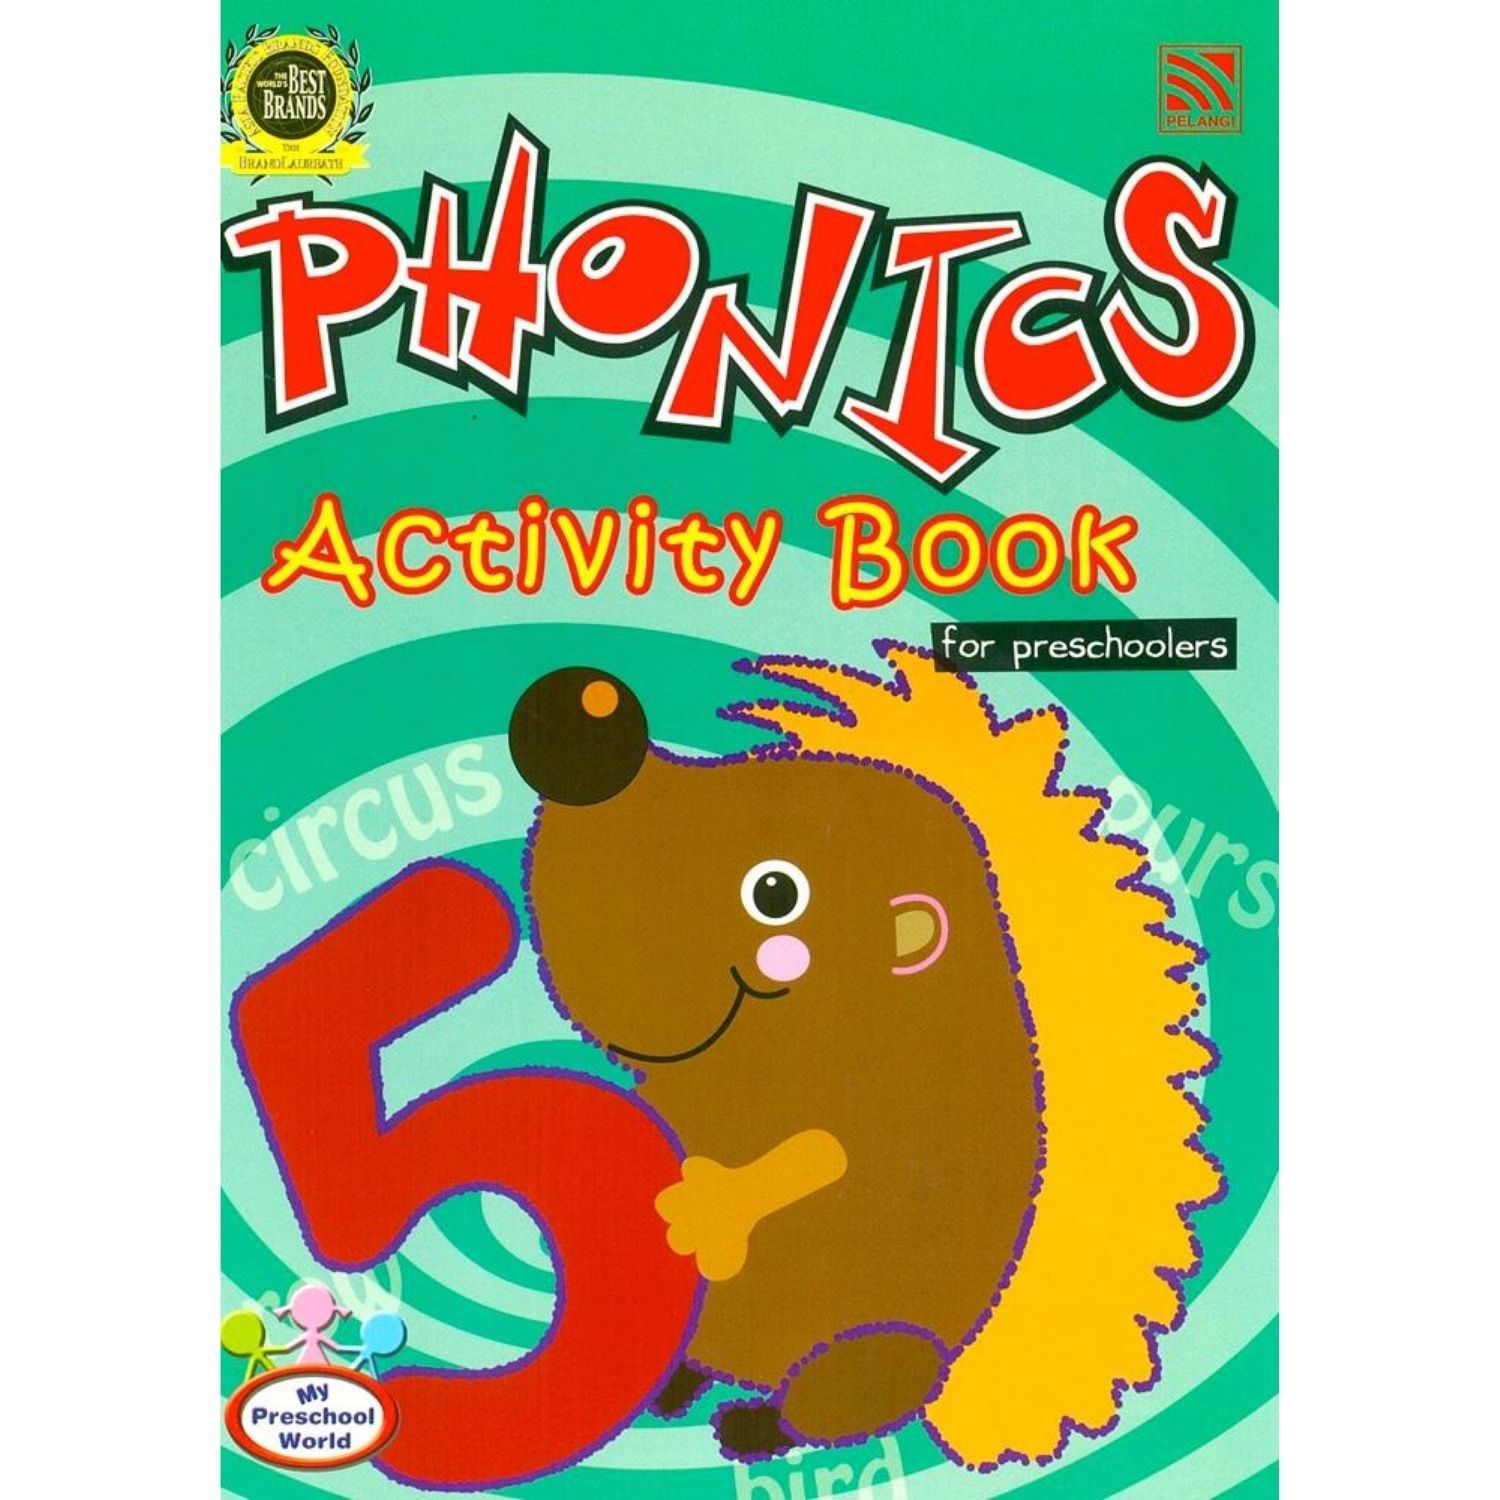 my-preschool-world-phonics-activity-book-5